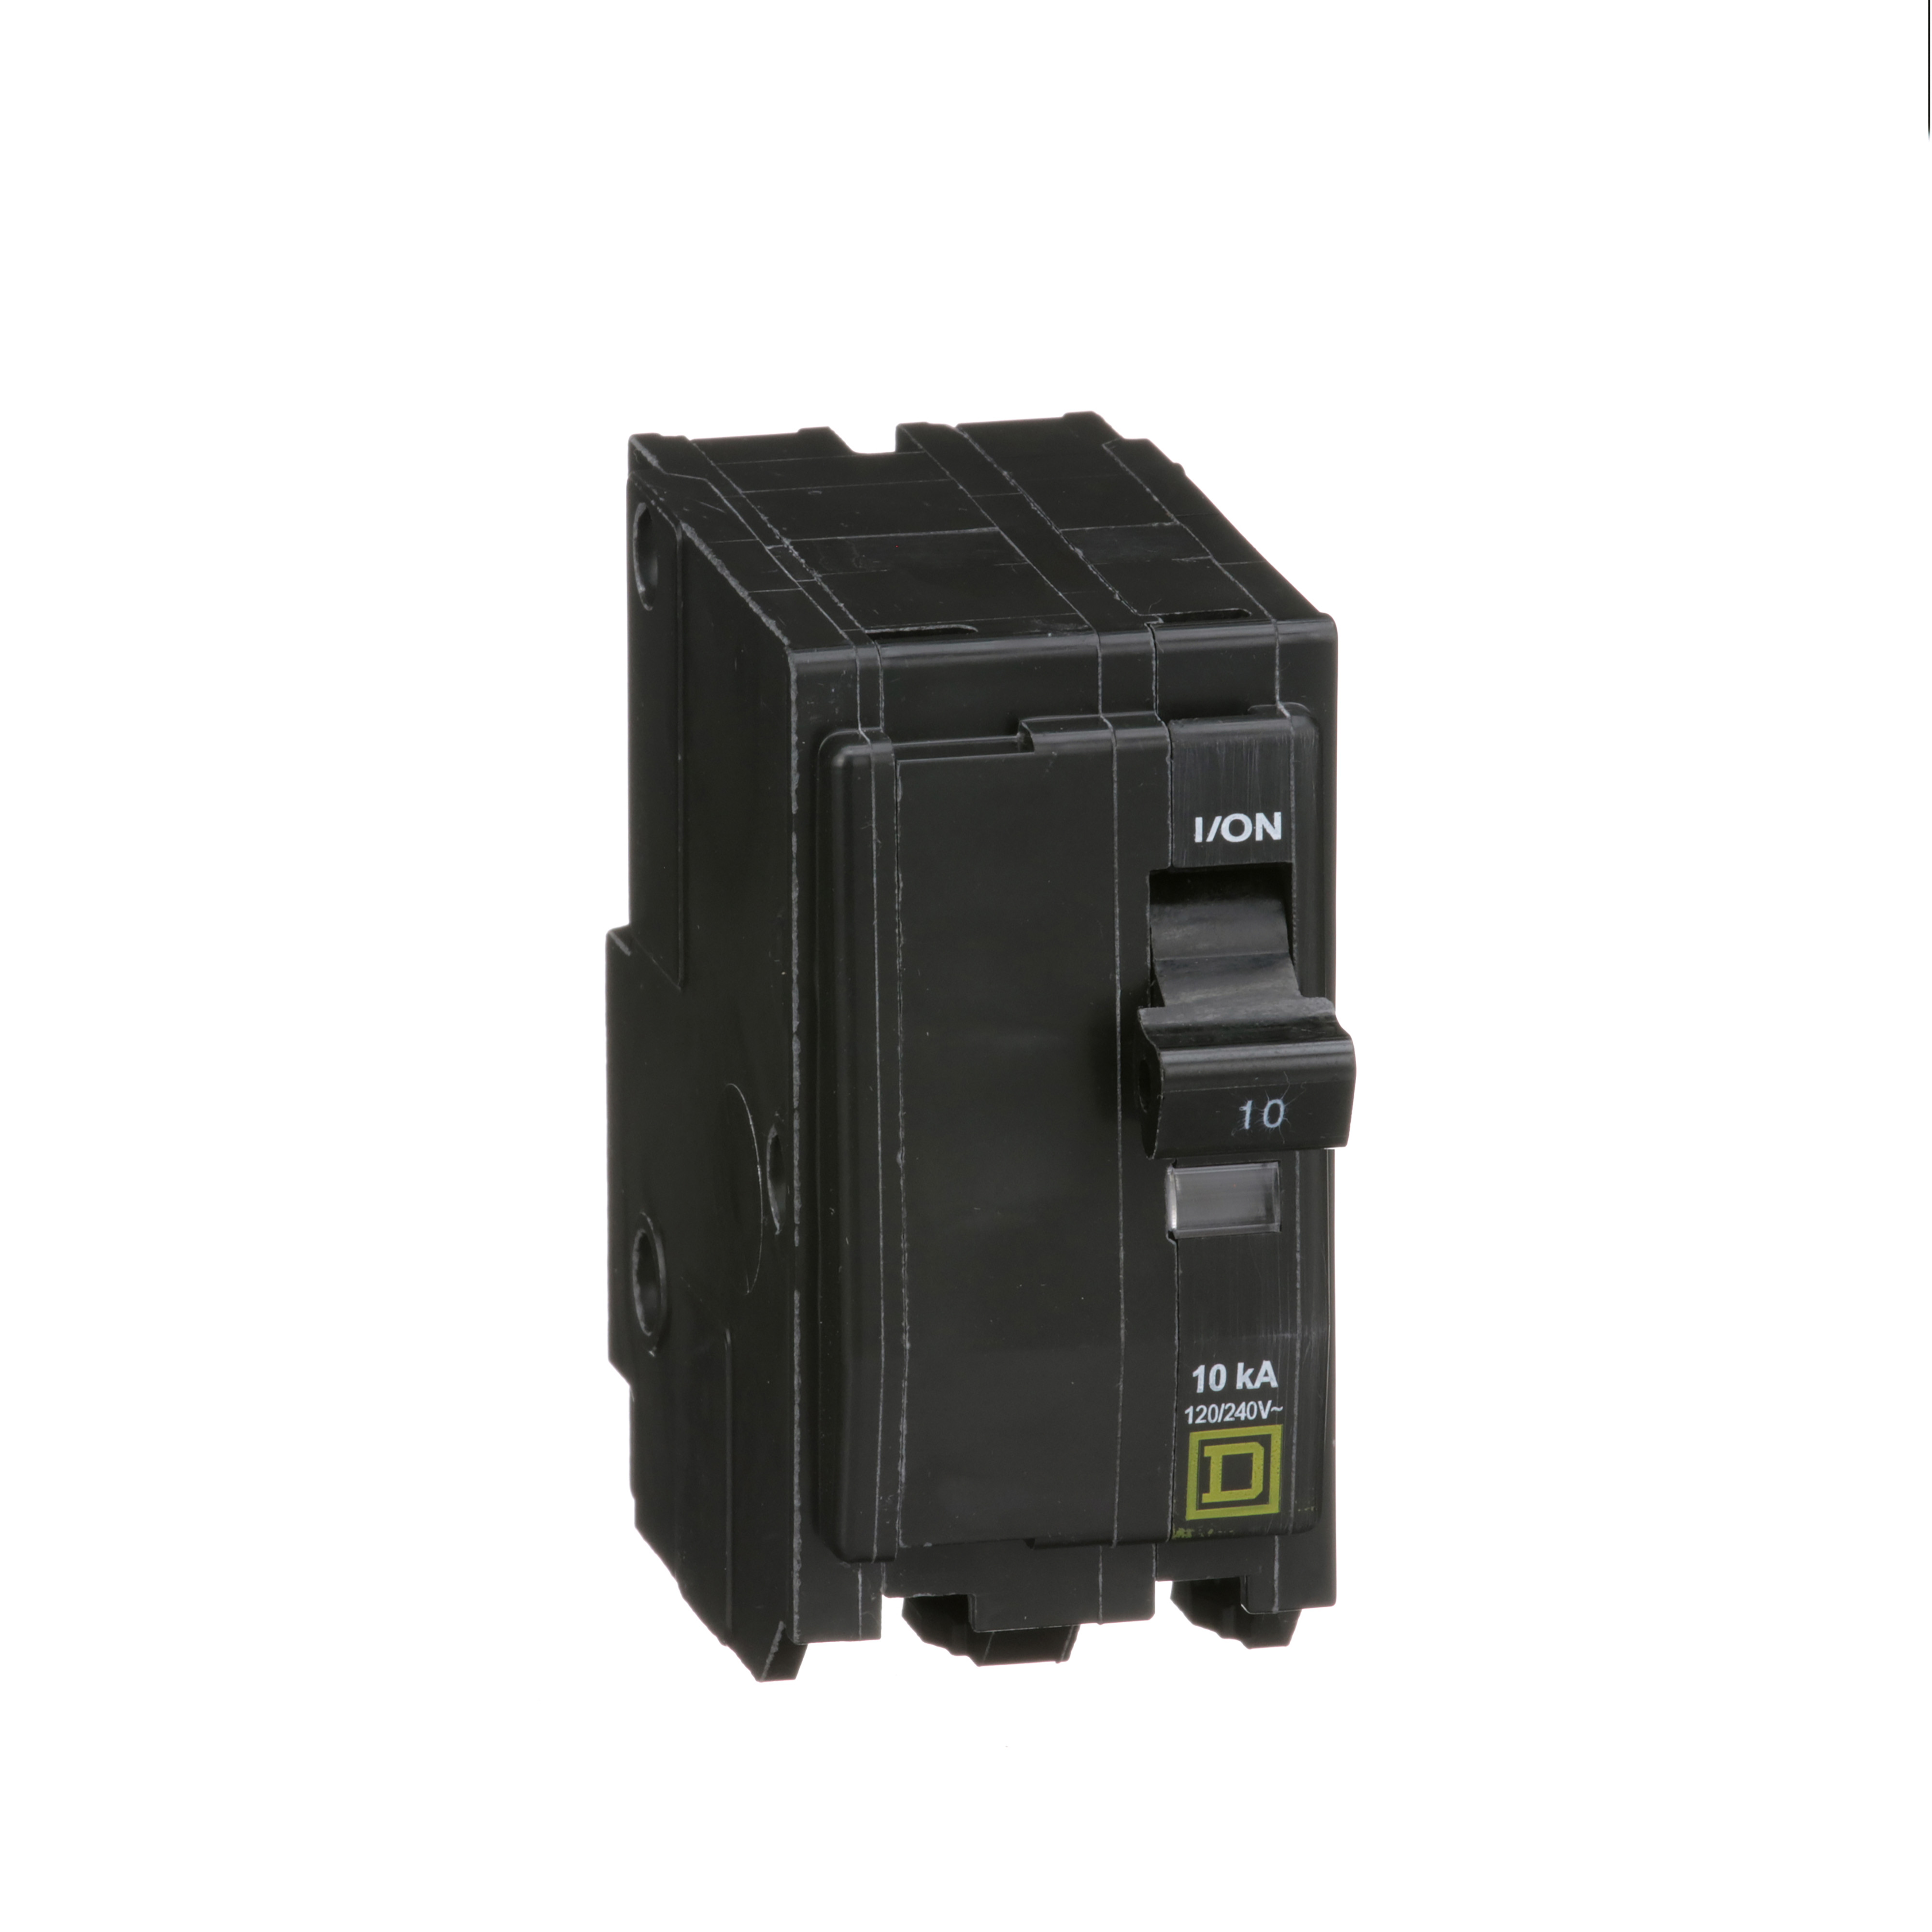 Mini circuit breaker, QO, 10A, 2 pole, 120/240VAC, 10kA, plug in